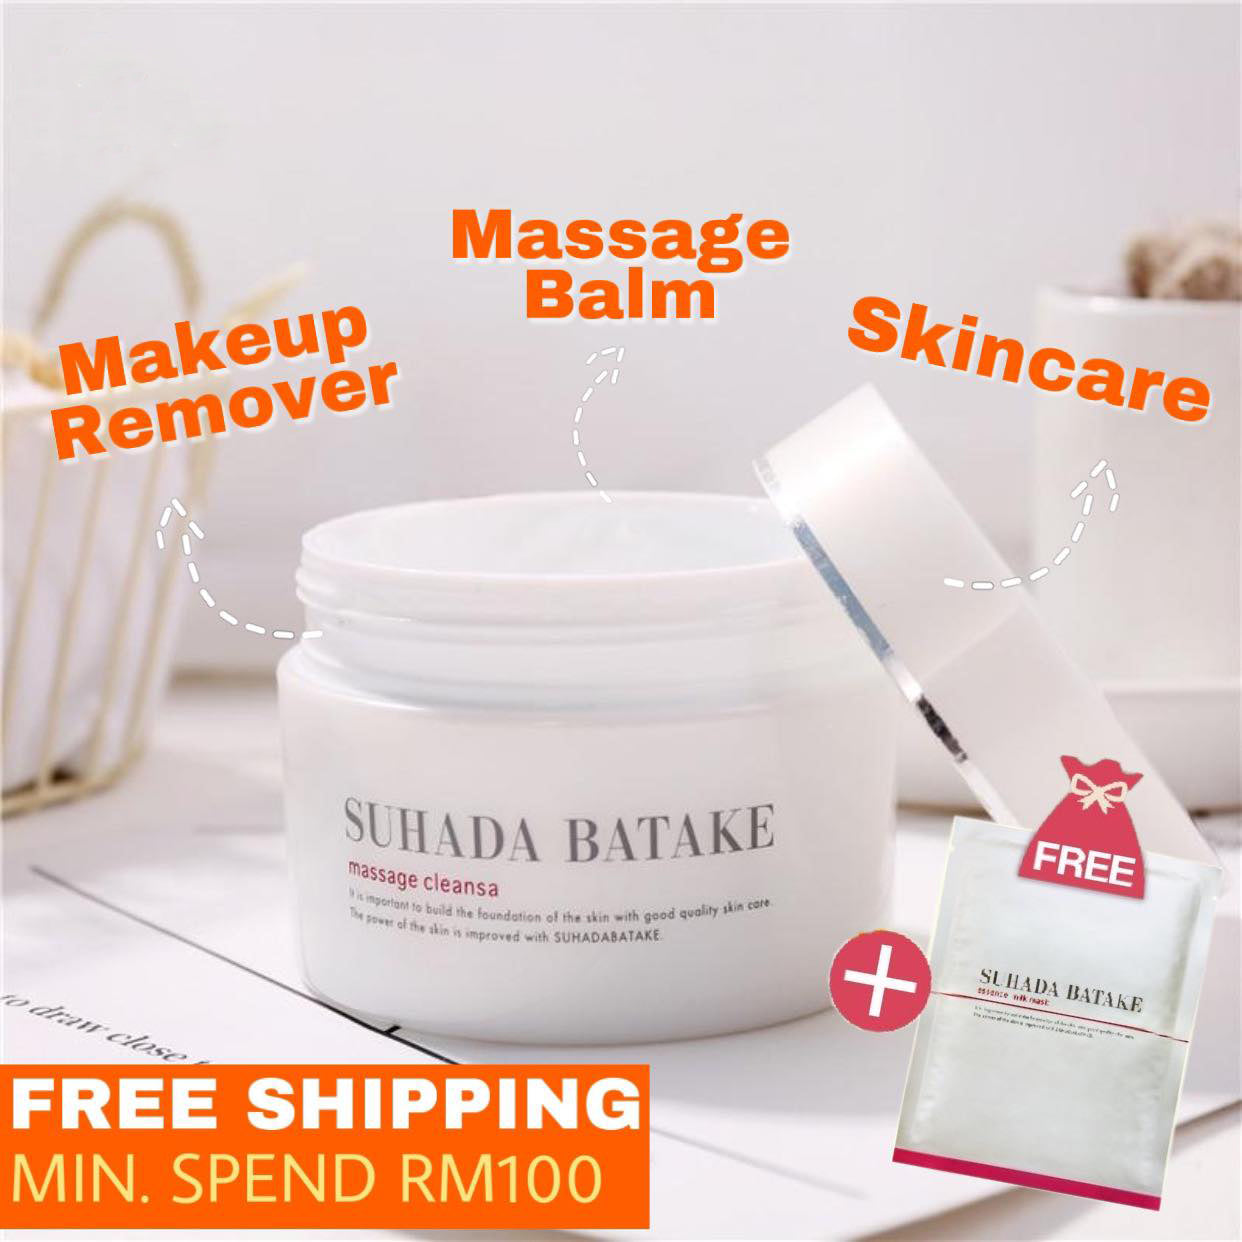 SUHADA BATAKE Massage Cleansa Makeup Remover Massage Cleansing Balm 按摩卸妆膏 (FREE MASK 附送面膜) 120g - SRN